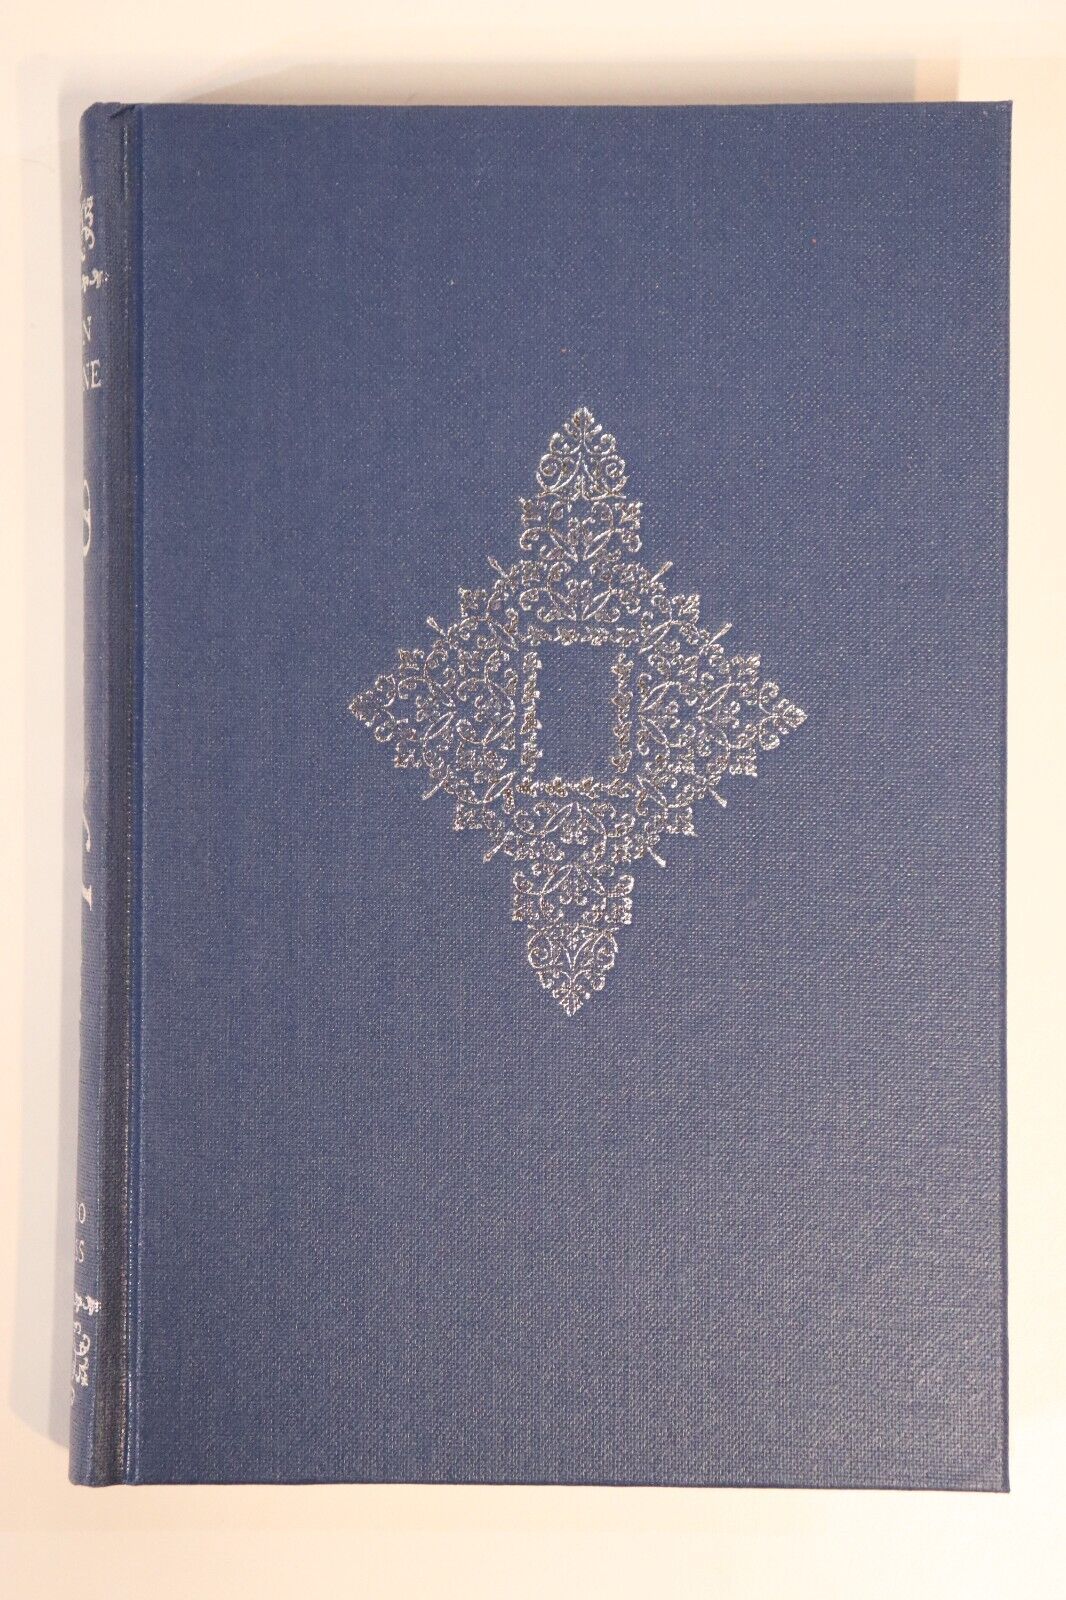 John Donne: Poems Of Love - 1990 - Folio Society - Poetry Book - 0